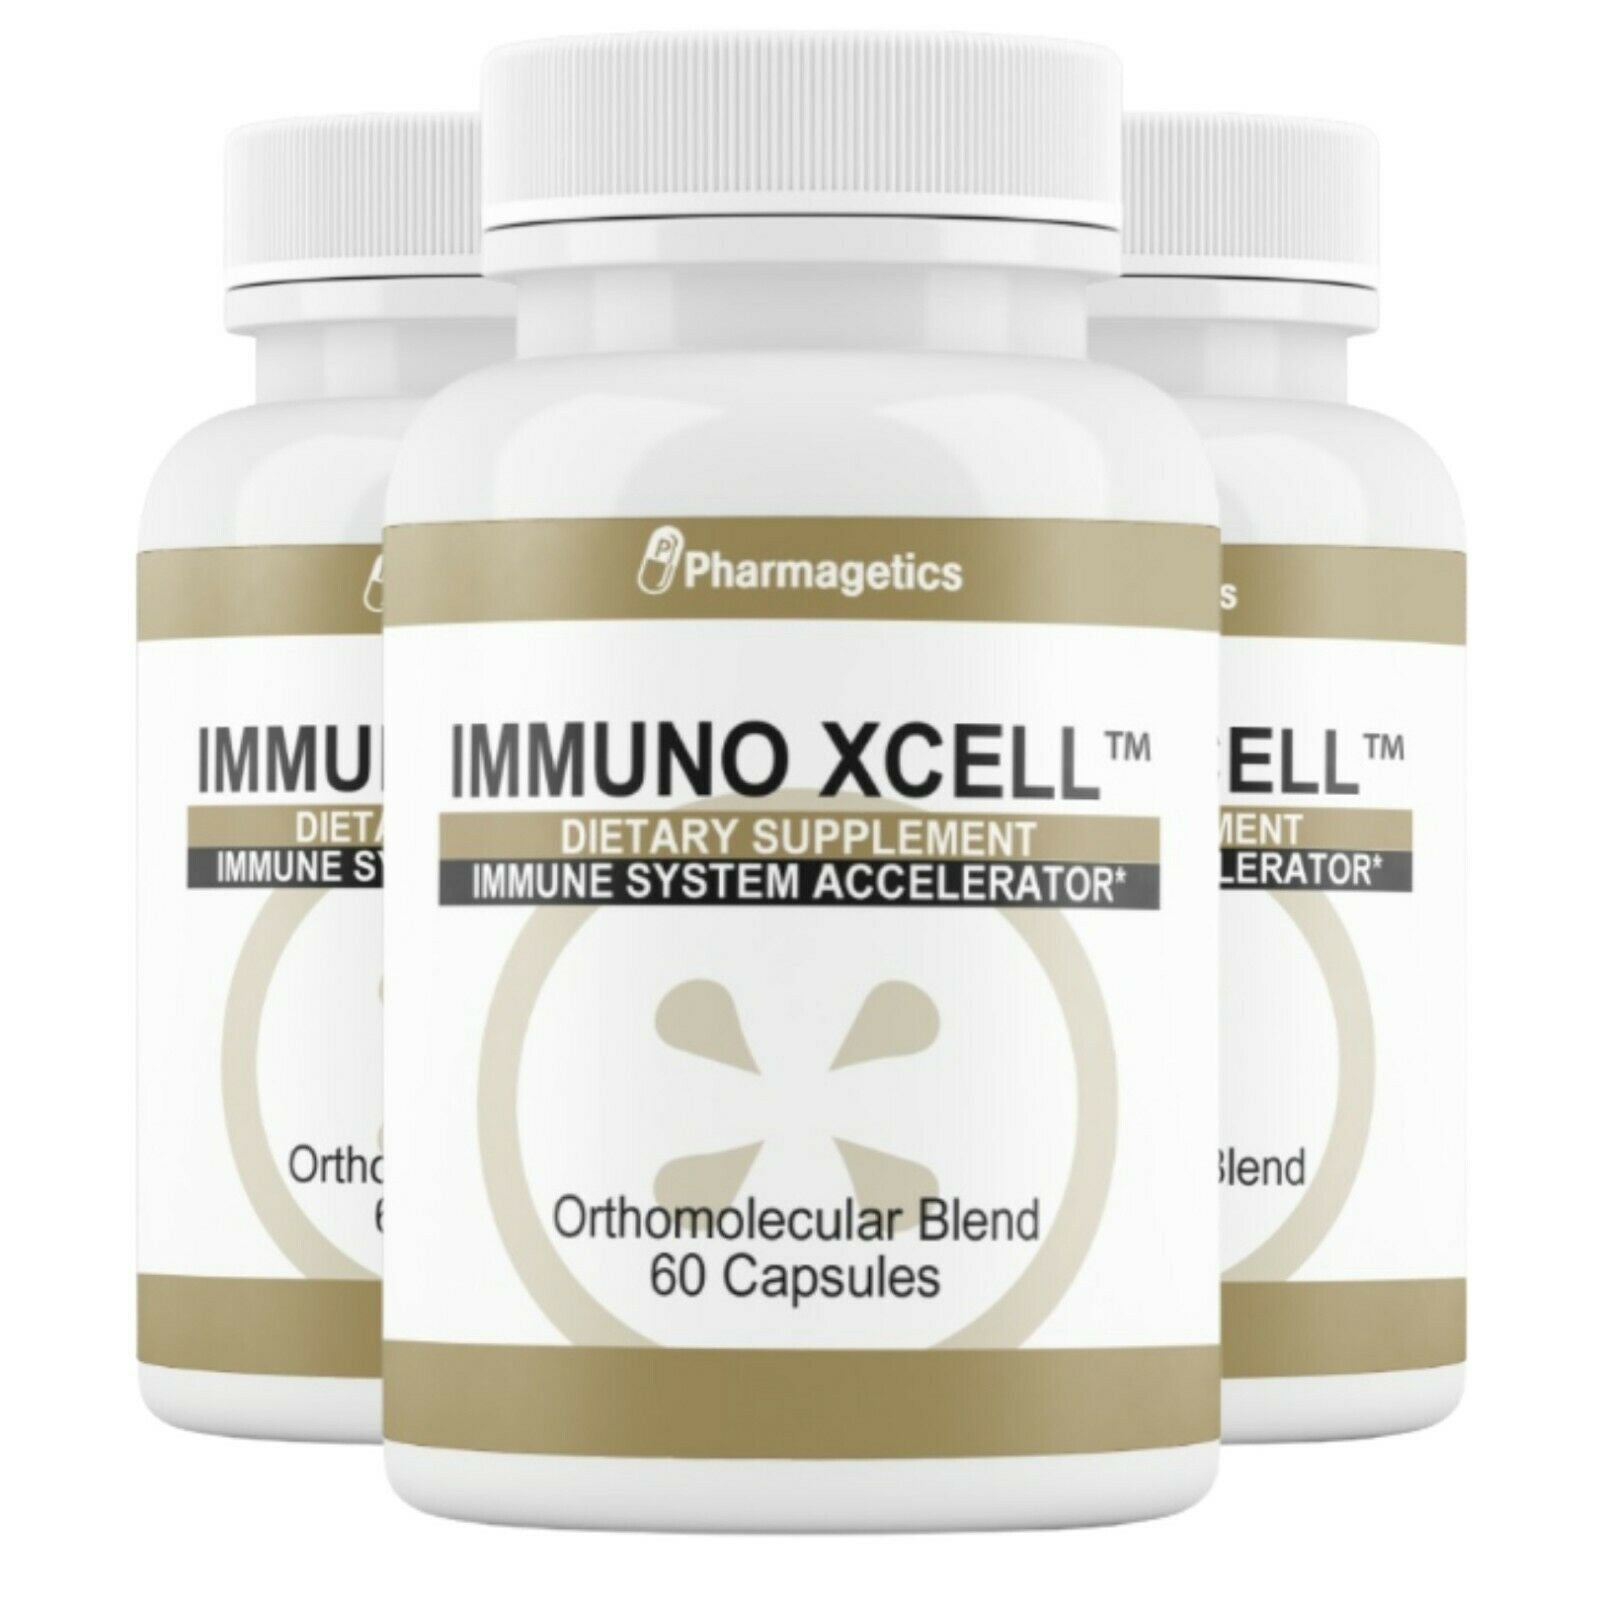 3 IMMUNO XCELL - Dietary Supplement -  60 Capsules - 180 Capsules - 3 Bottles